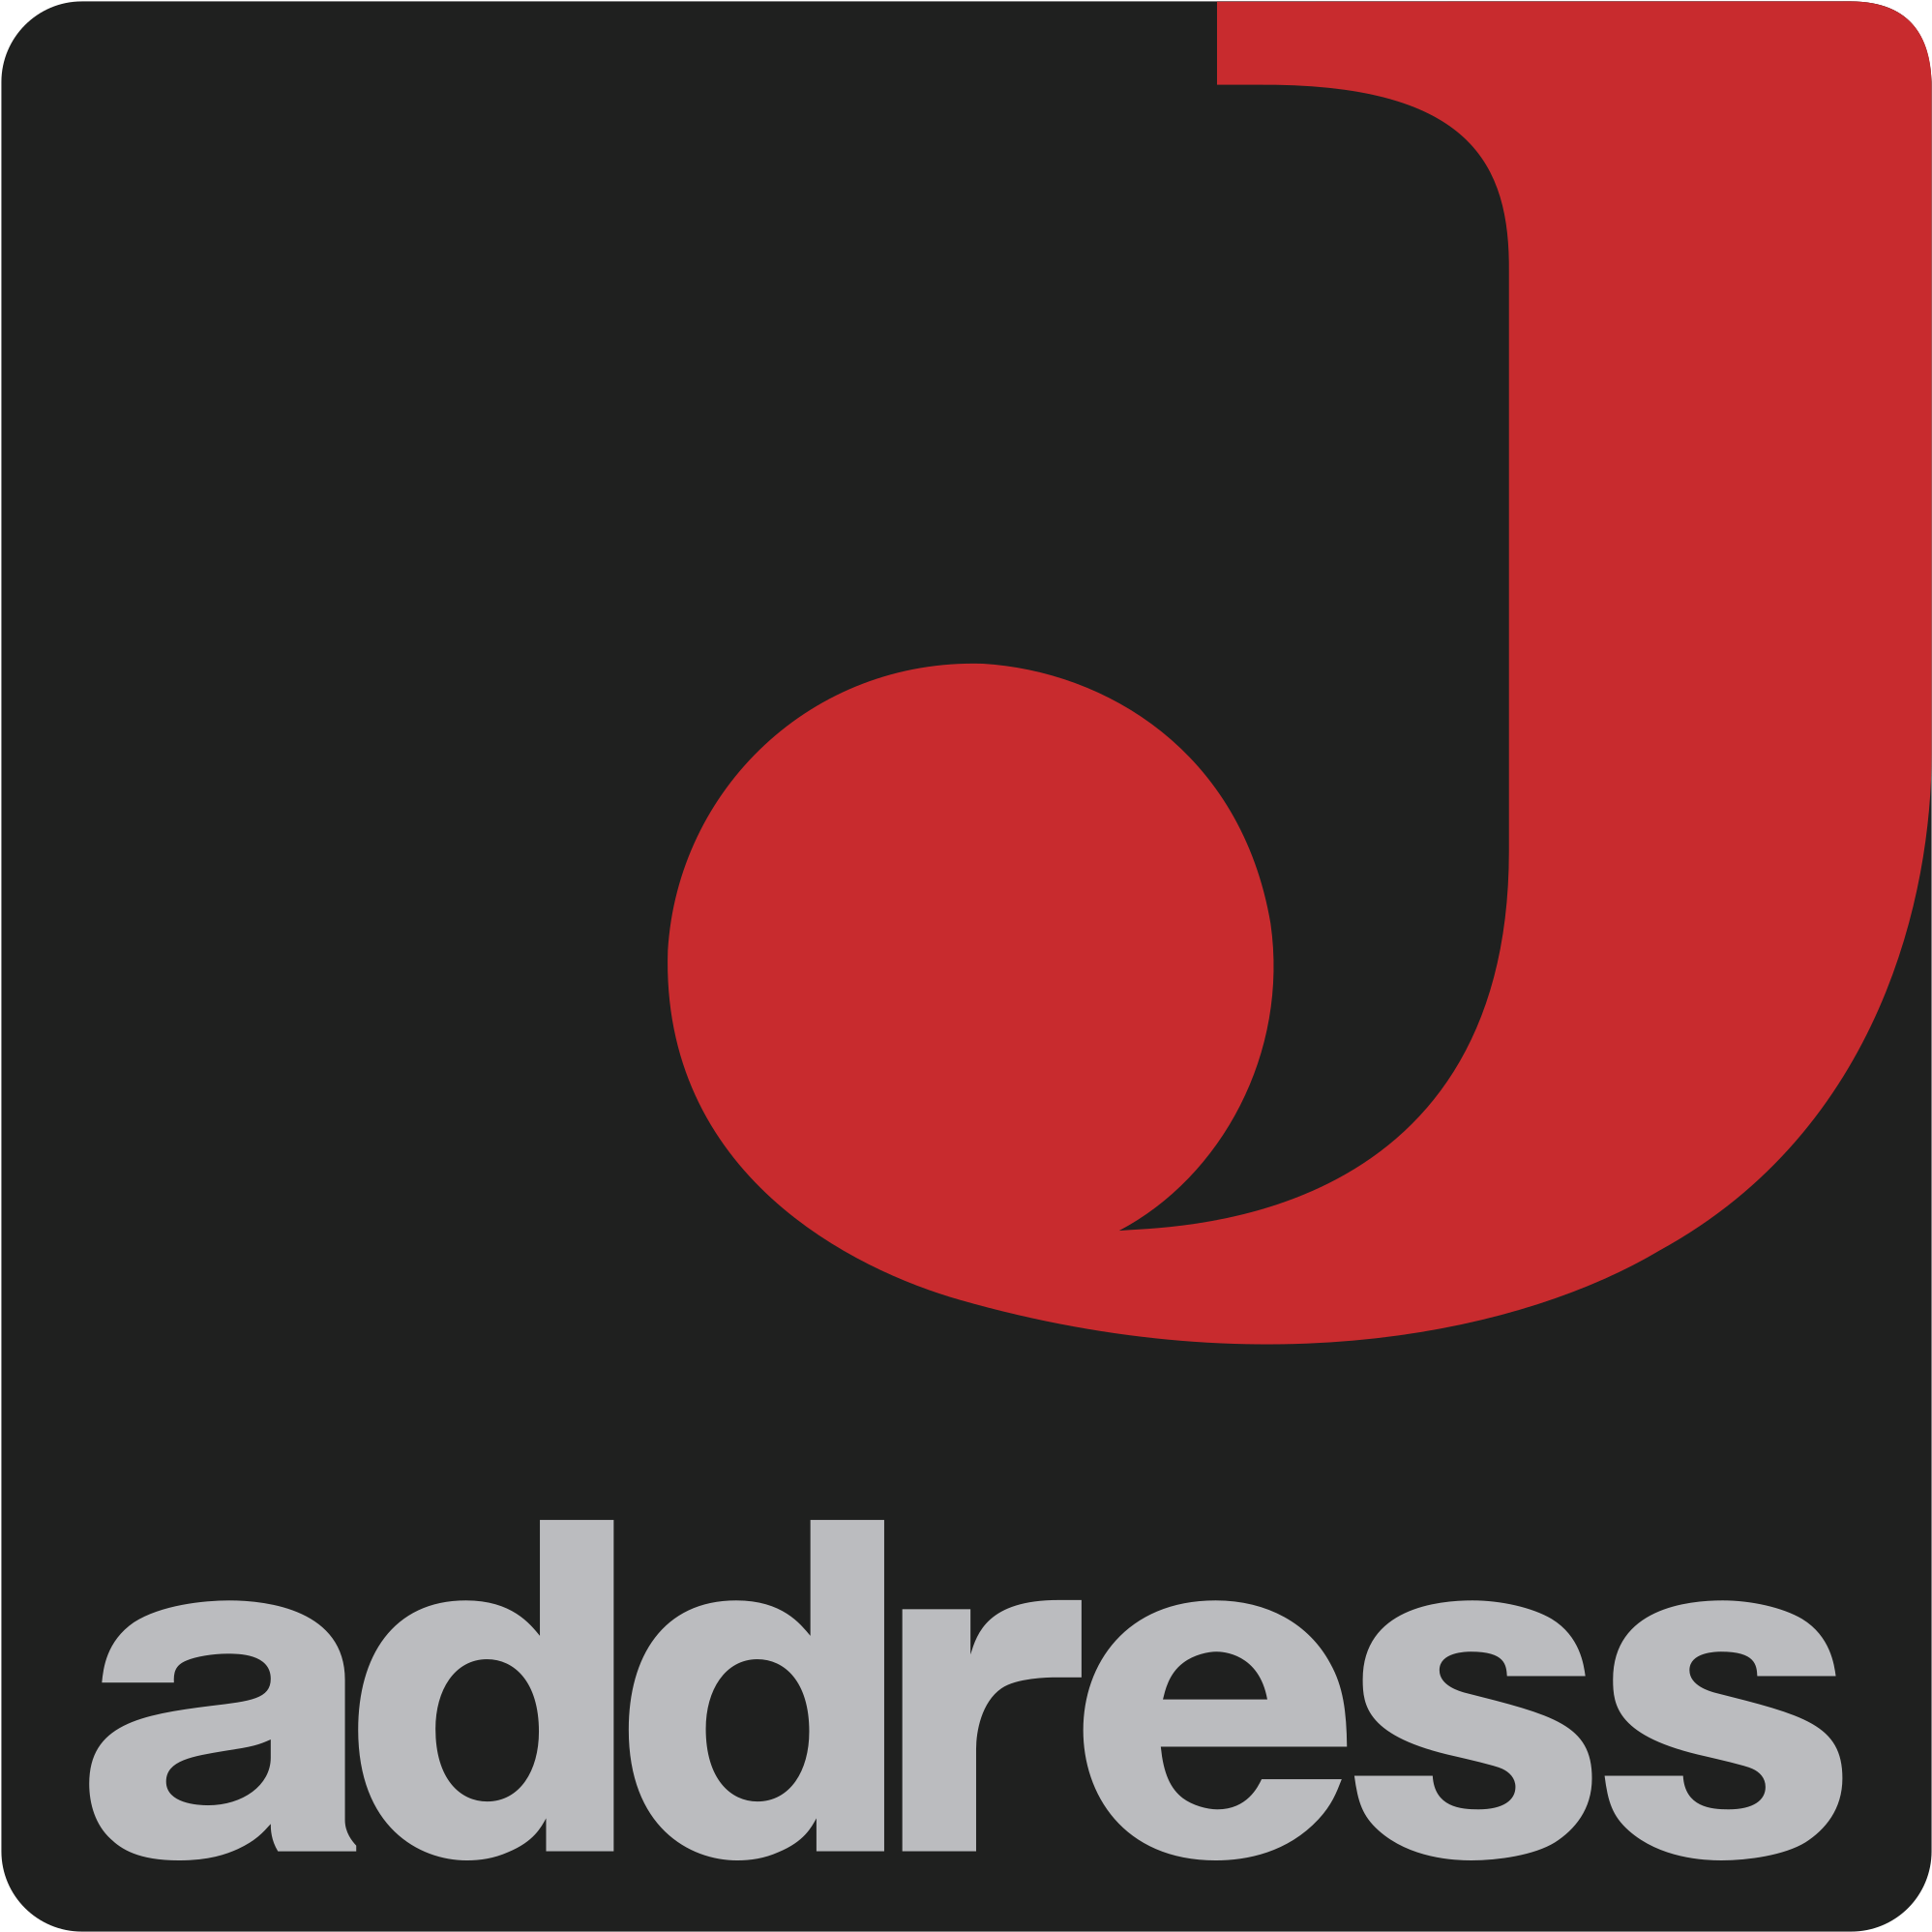 J Address Logo Png Transparent - Danny Dyer The Business (2400x2400)